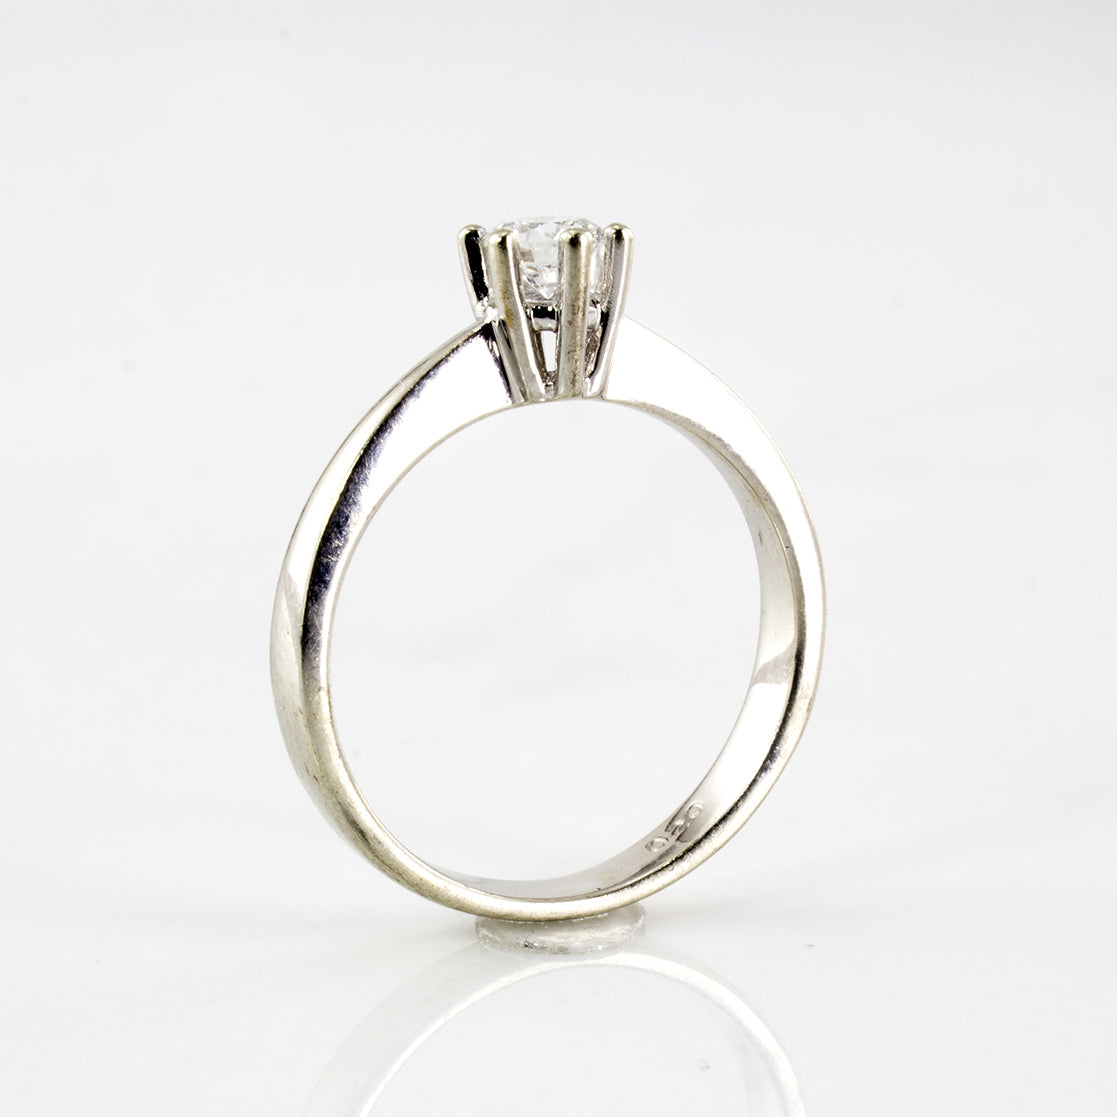 Six Prong Diamond Solitaire Engagement Ring | 0.17 ctw | SZ 3.75 |